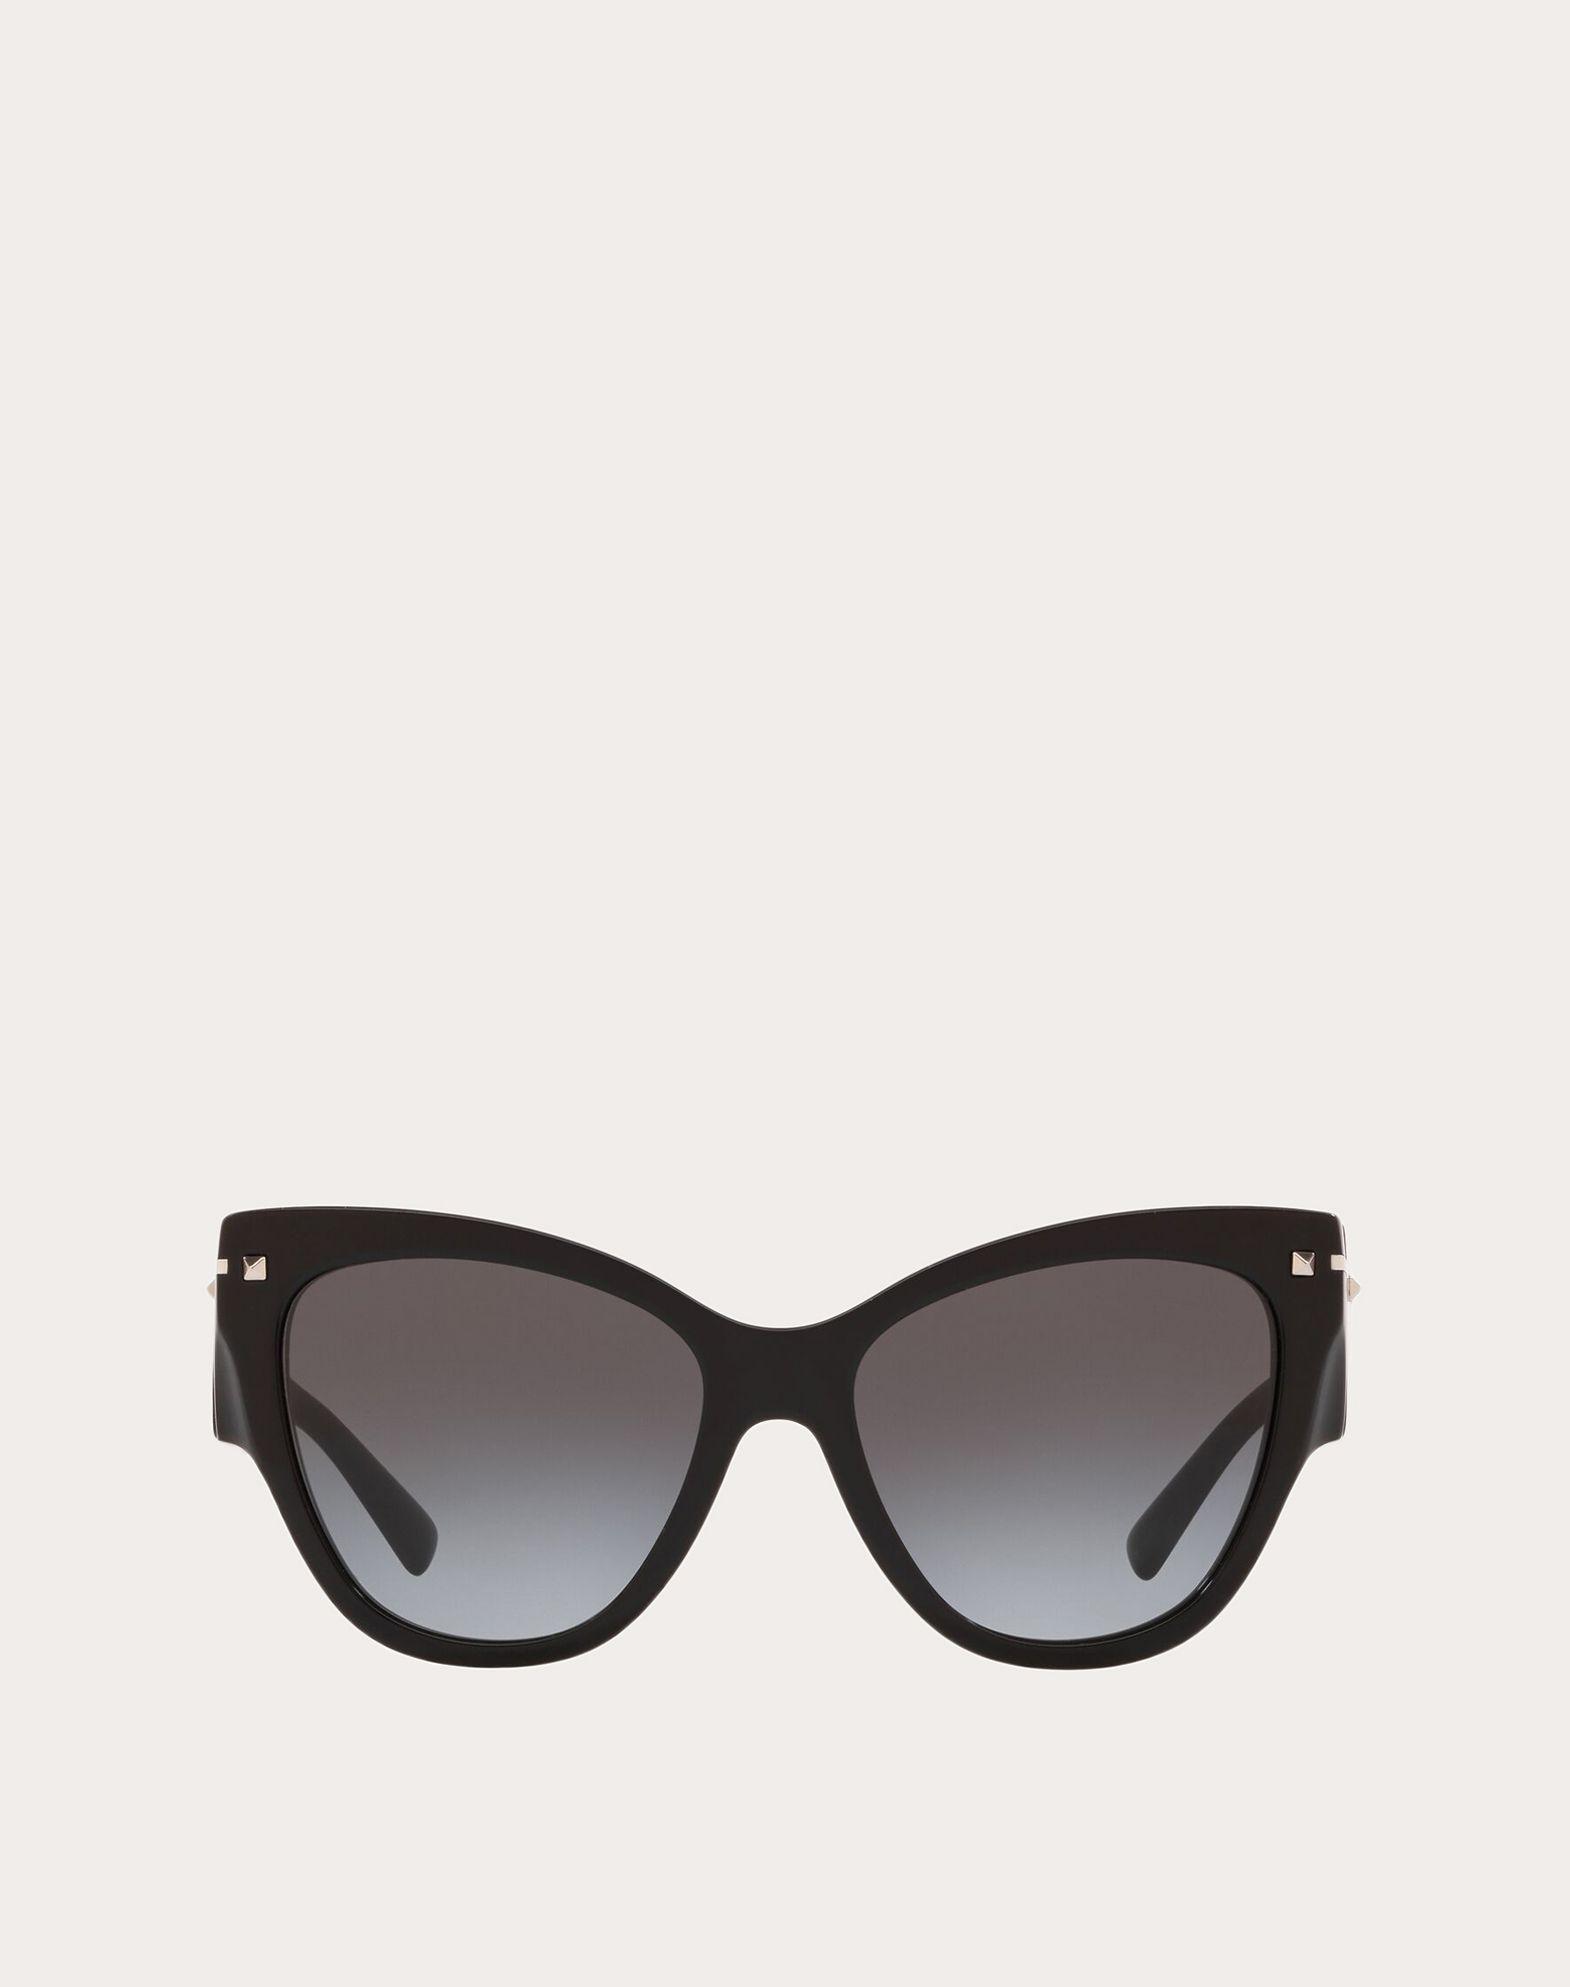 Valentino Occhiali Cat-eye Frame Acetate Sunglasses in Black - Save 34% ...